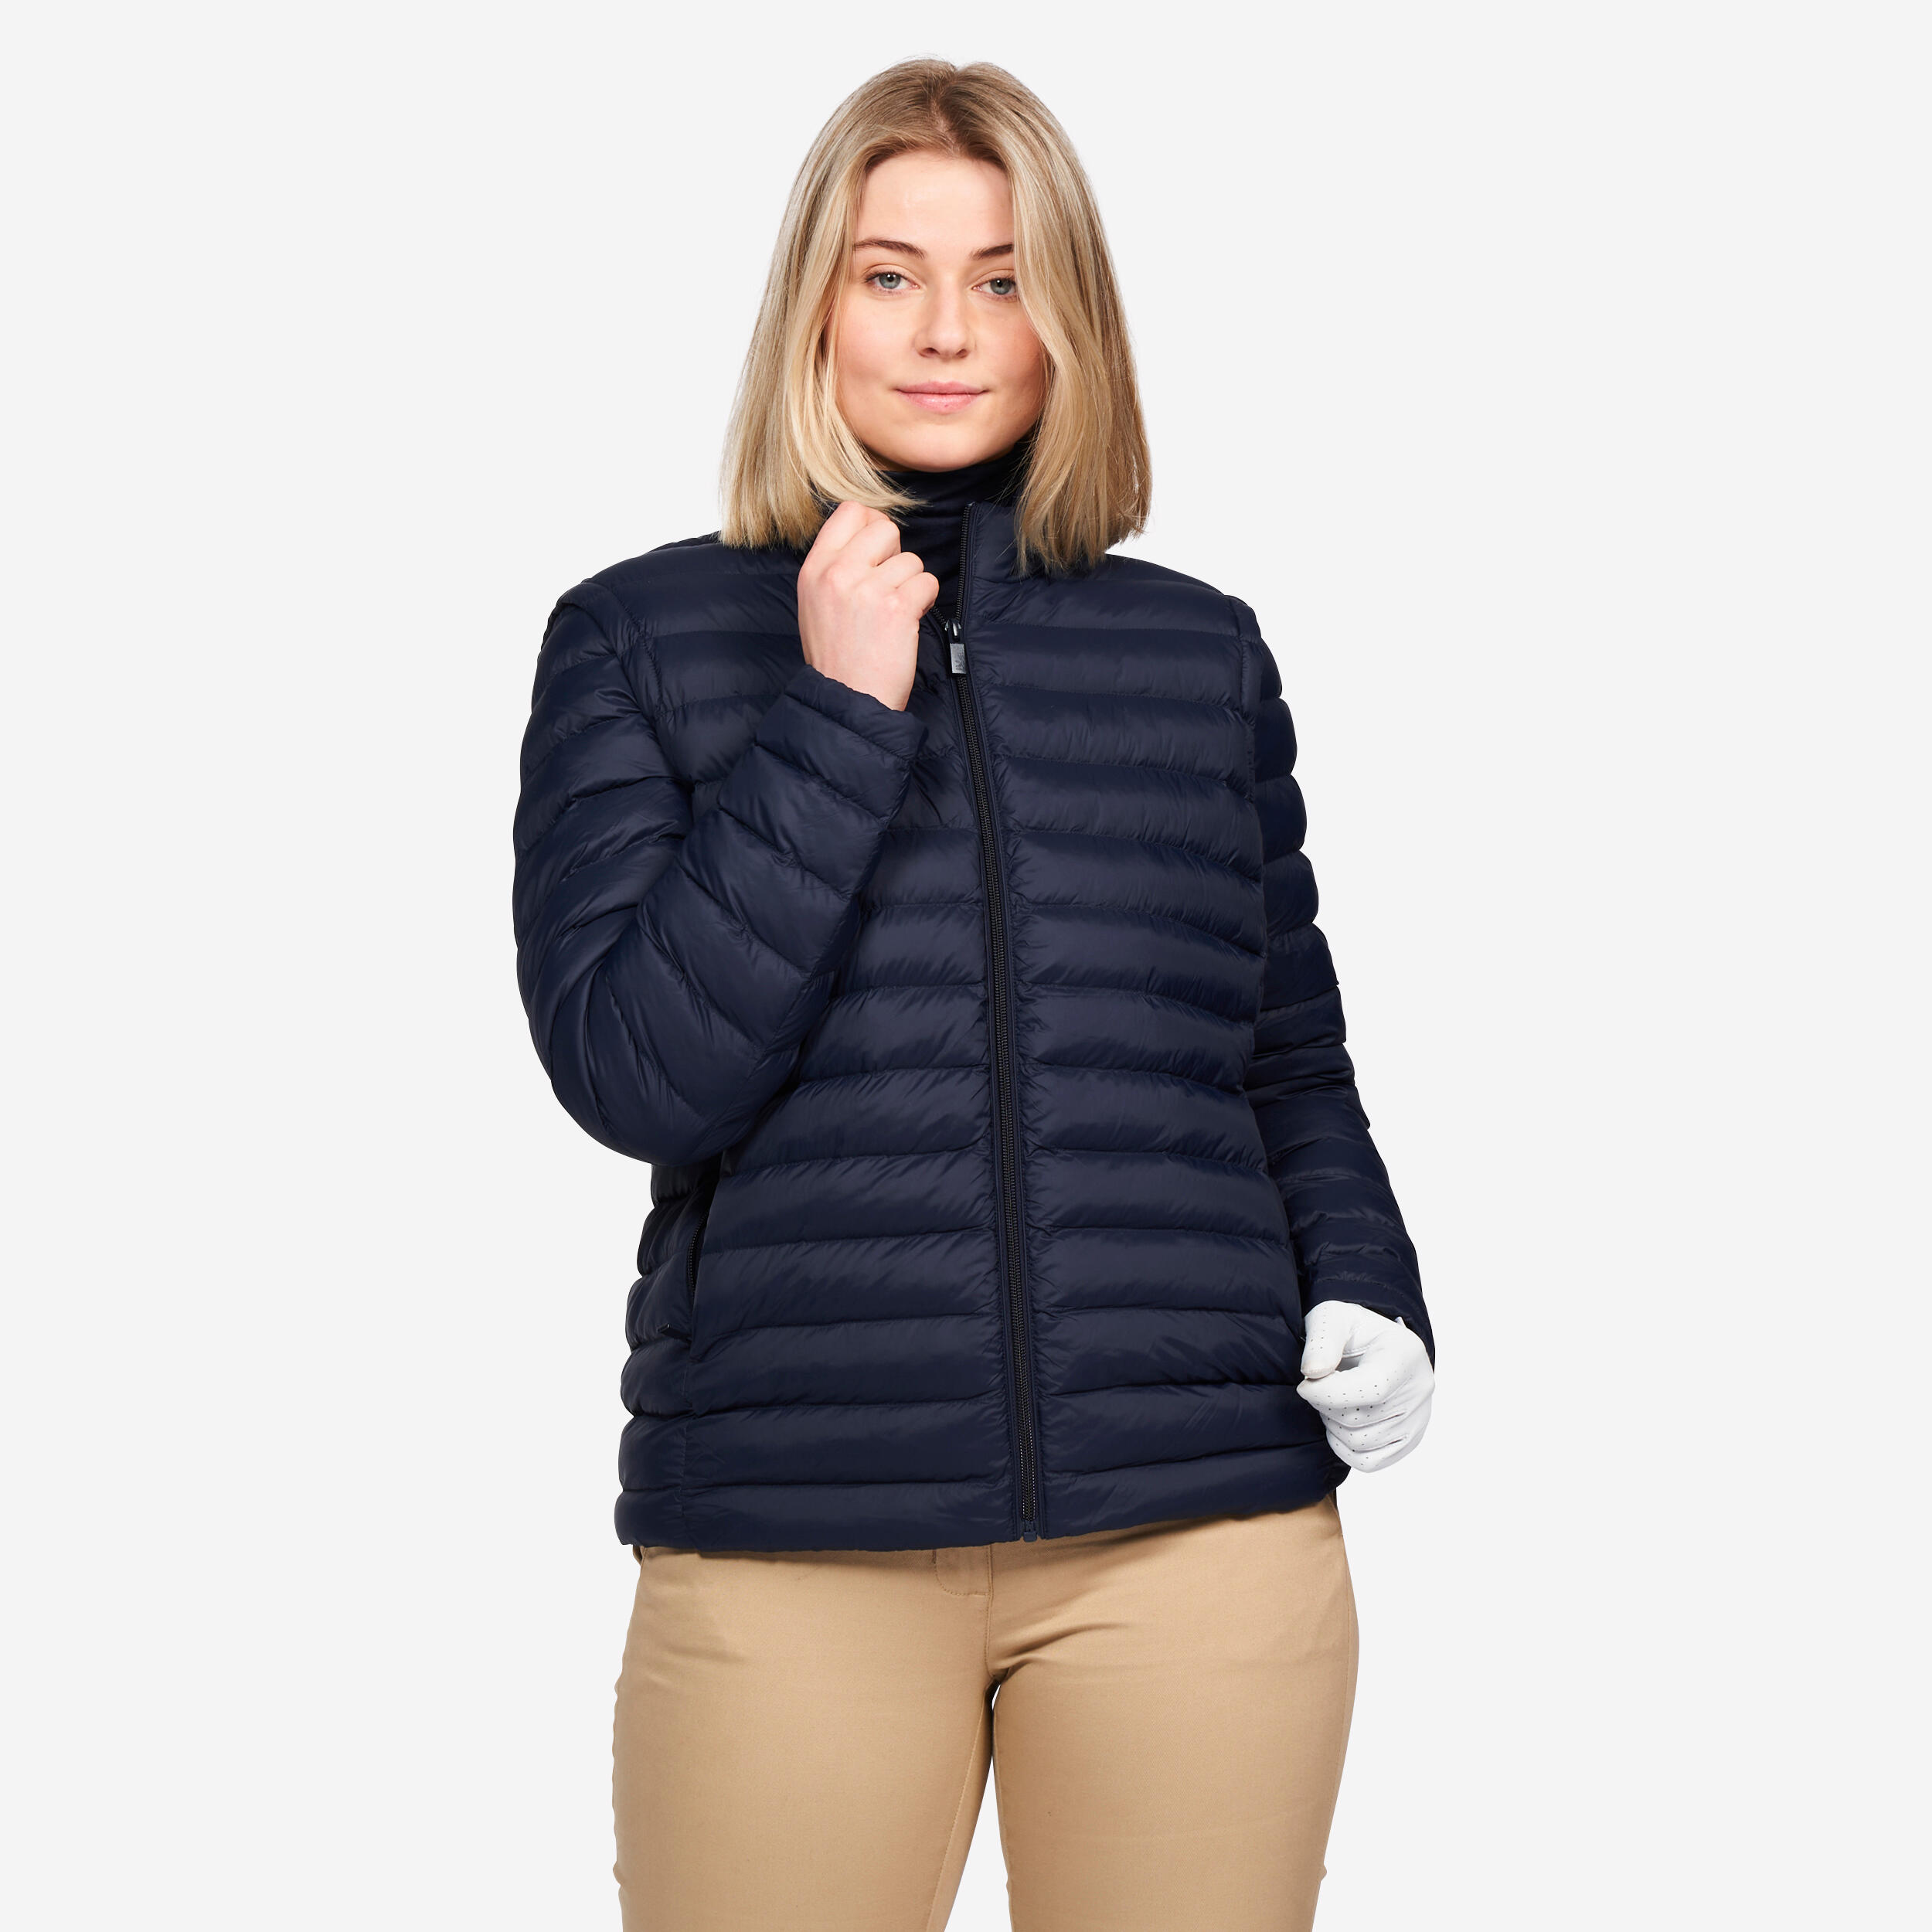 Women's golf long sleeved down jacket - CW900 Heatflex navy 1/7